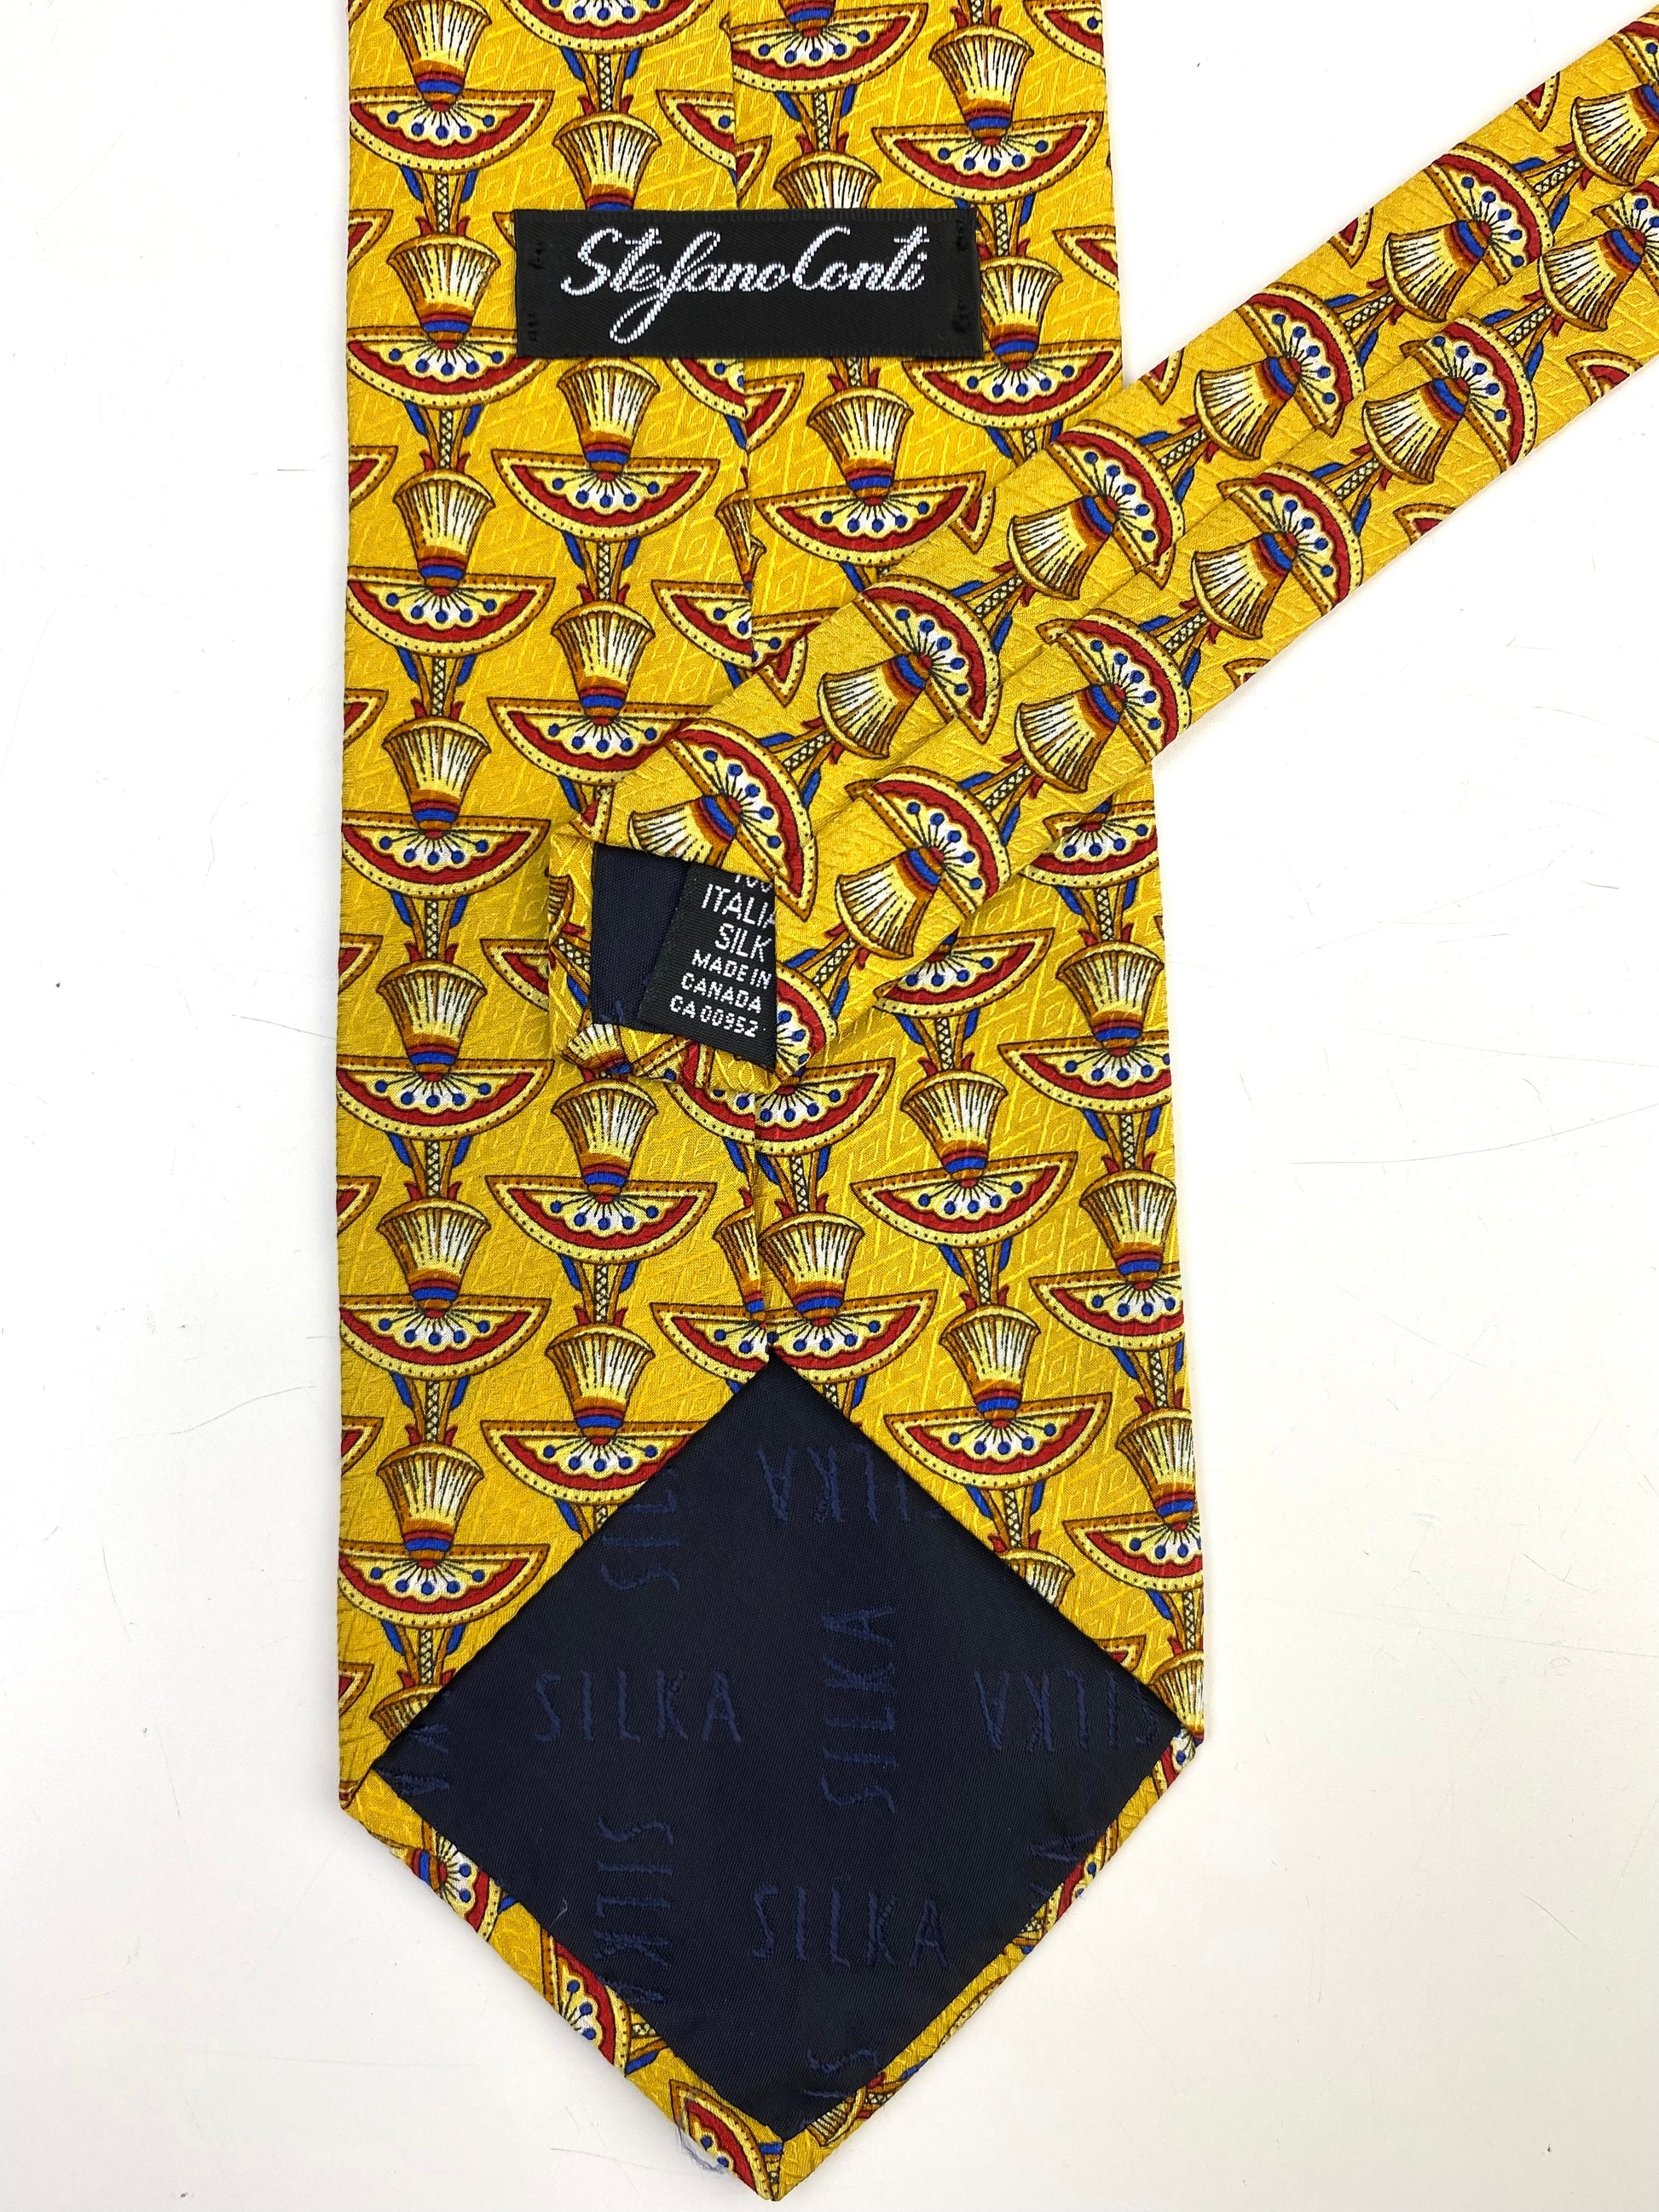 90s Deadstock Silk Necktie, Men's Vintage Gold/ Red Art Deco Pattern Tie, NOS